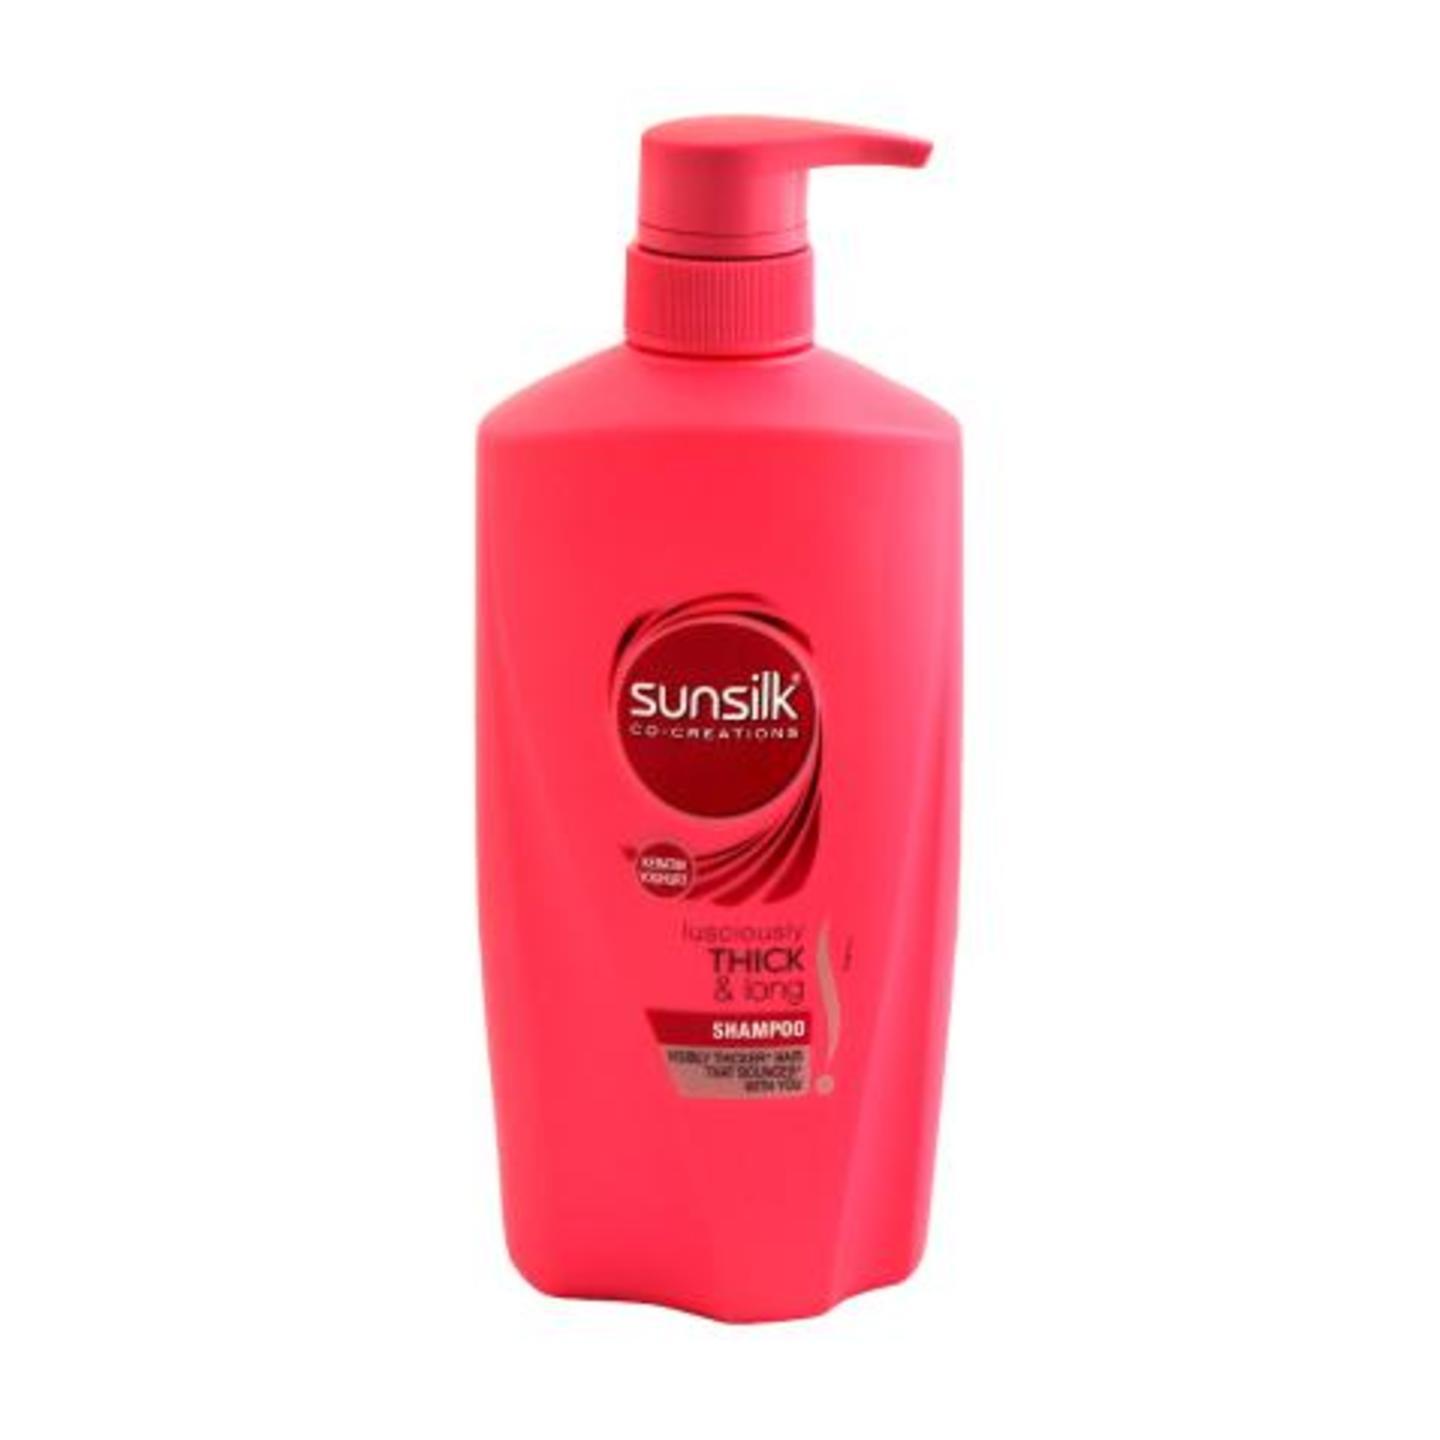 Sunsilk Co-Creations Lusciously Thick & Long Shampoo 650 ml PMBM